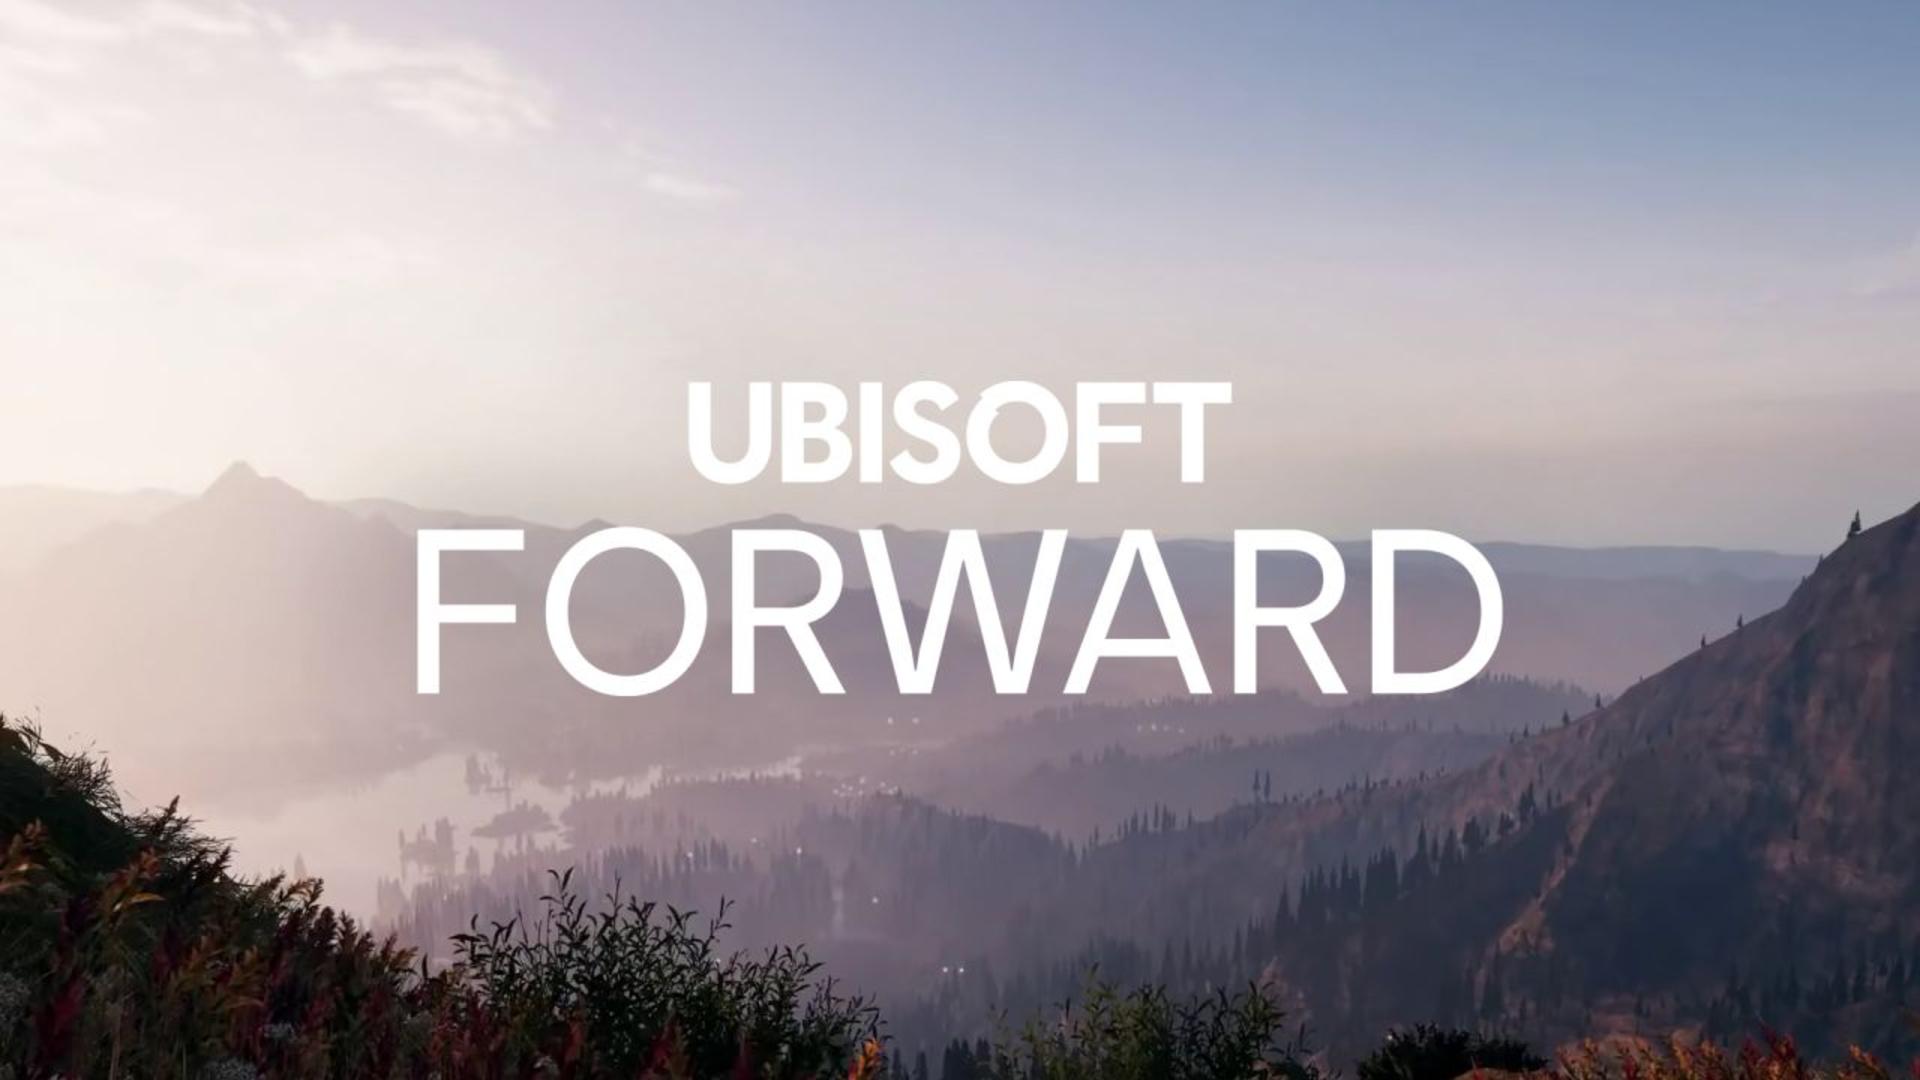 Ubisoft forward será o evento online em julho | f19f21a1 ubisoft forward | married games tom clancy | tom clancy | ubisoft forward